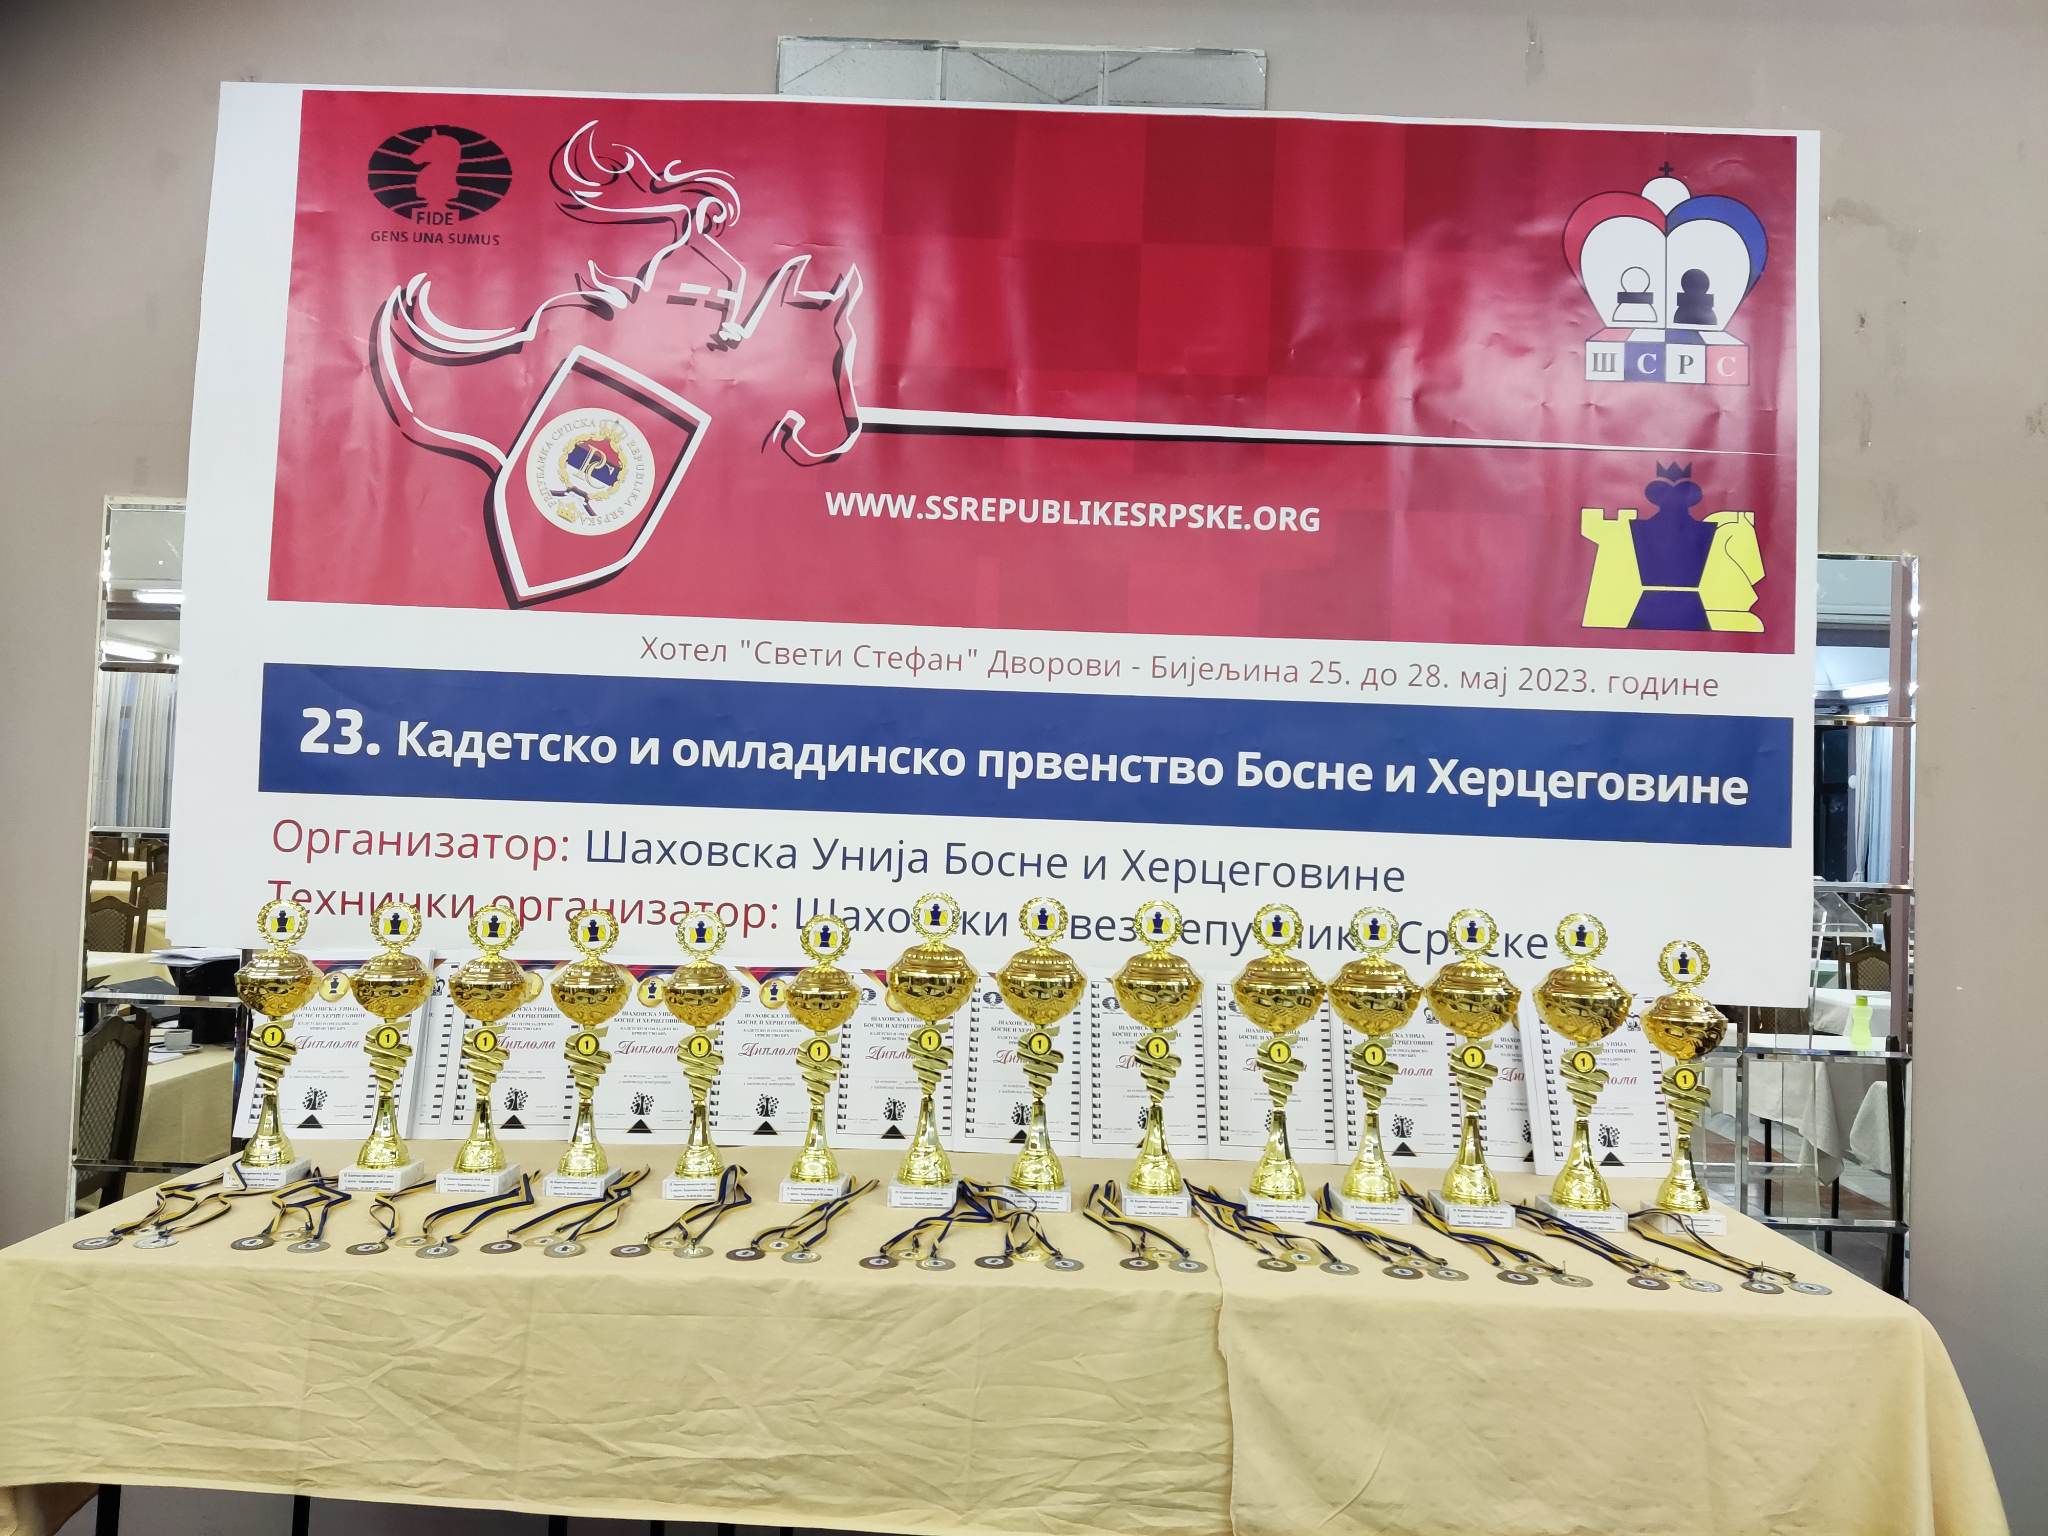 Dvije medalje za ŠK “Čelik” Zenica na 23. kadetskom i juniorskom prvenstvu Bosne i Hercegovine